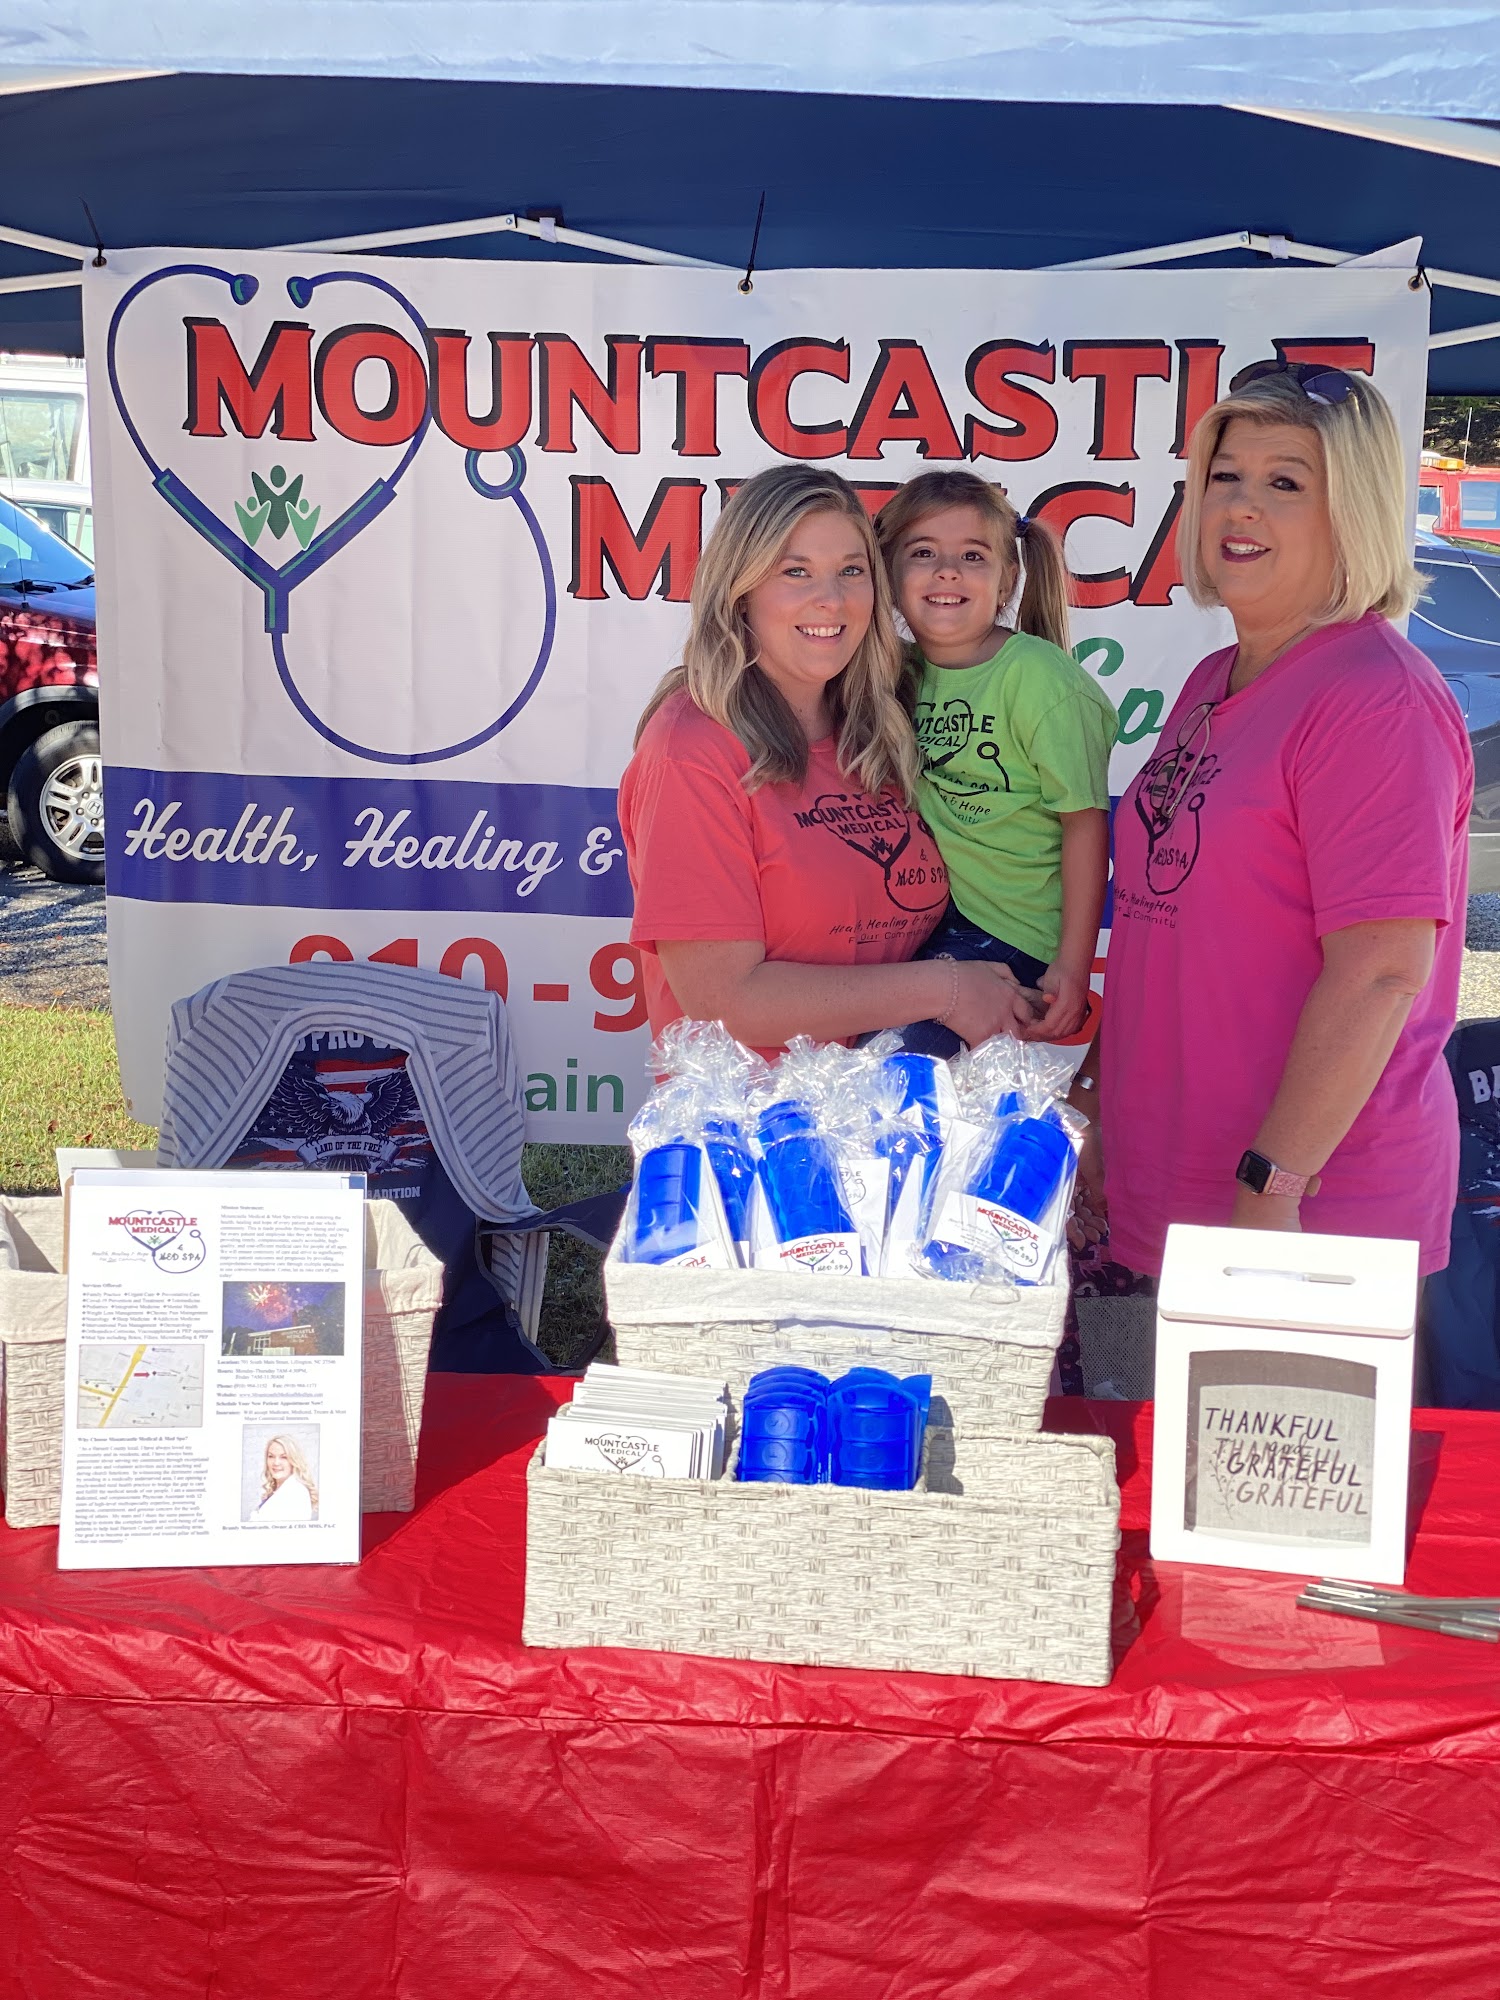 Mountcastle Medical & Med Spa 701 S Main St, Lillington North Carolina 27546